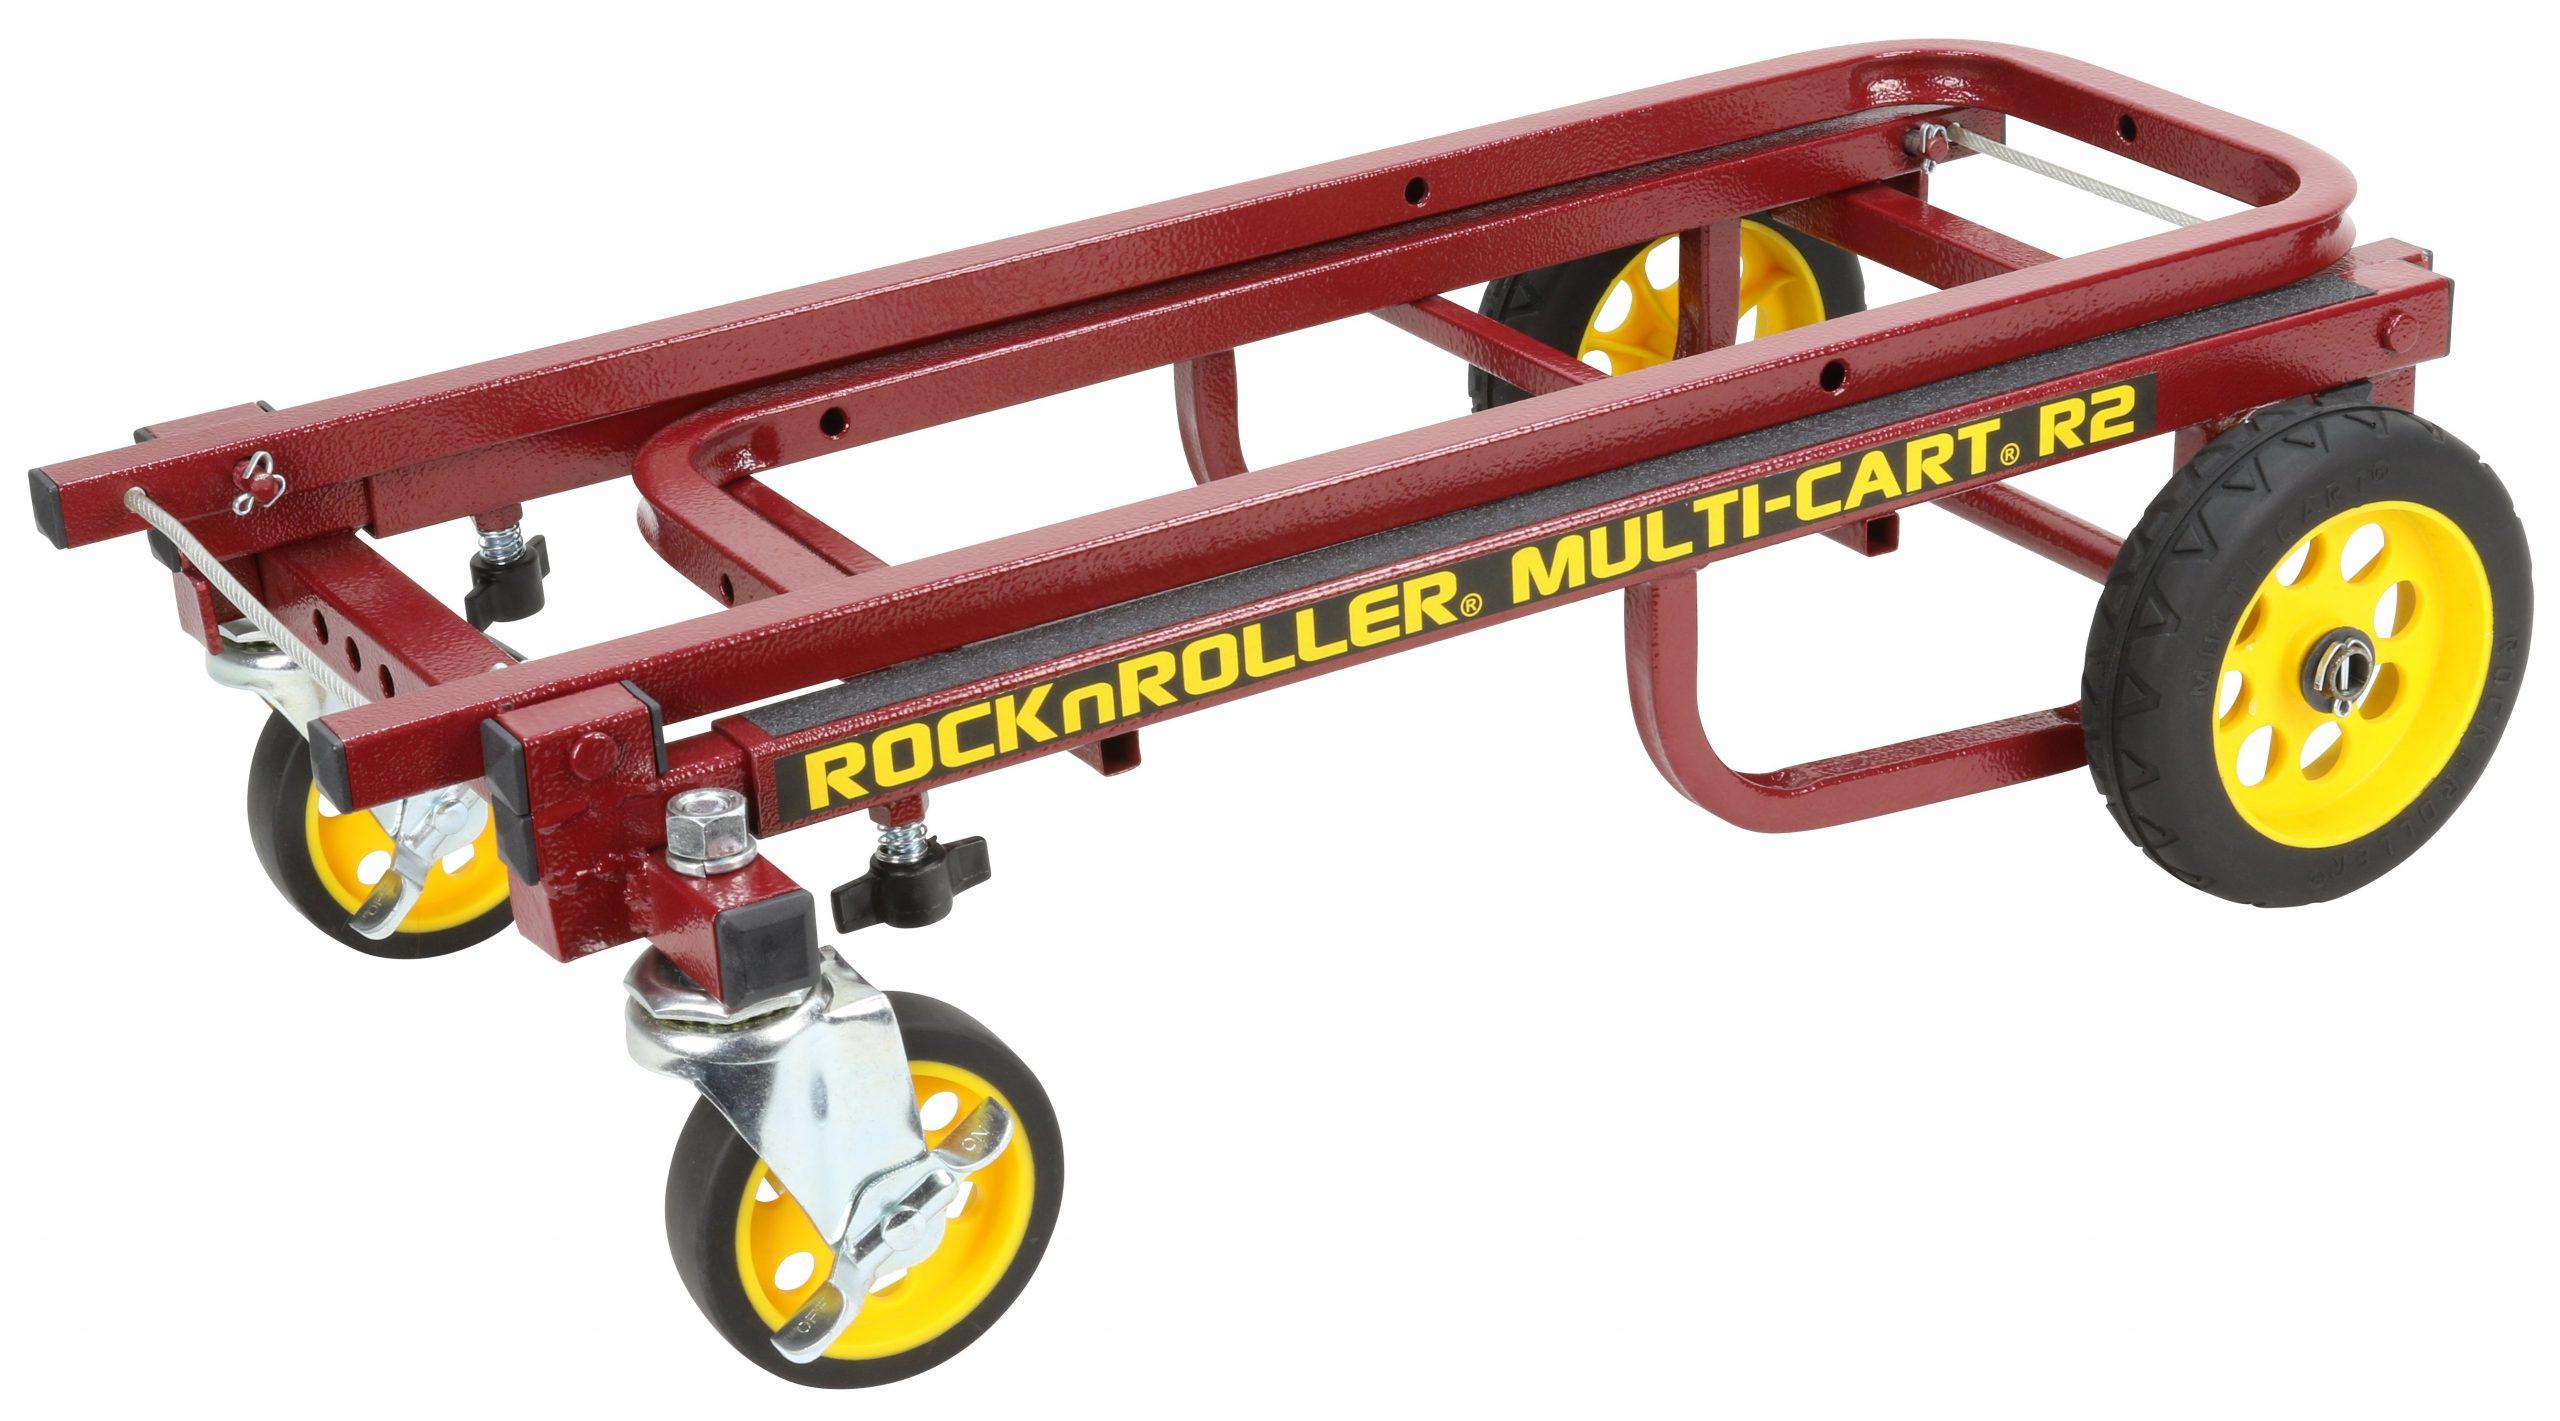 RocknRoller Multi-Cart R2RT-RD "Micro" - Red